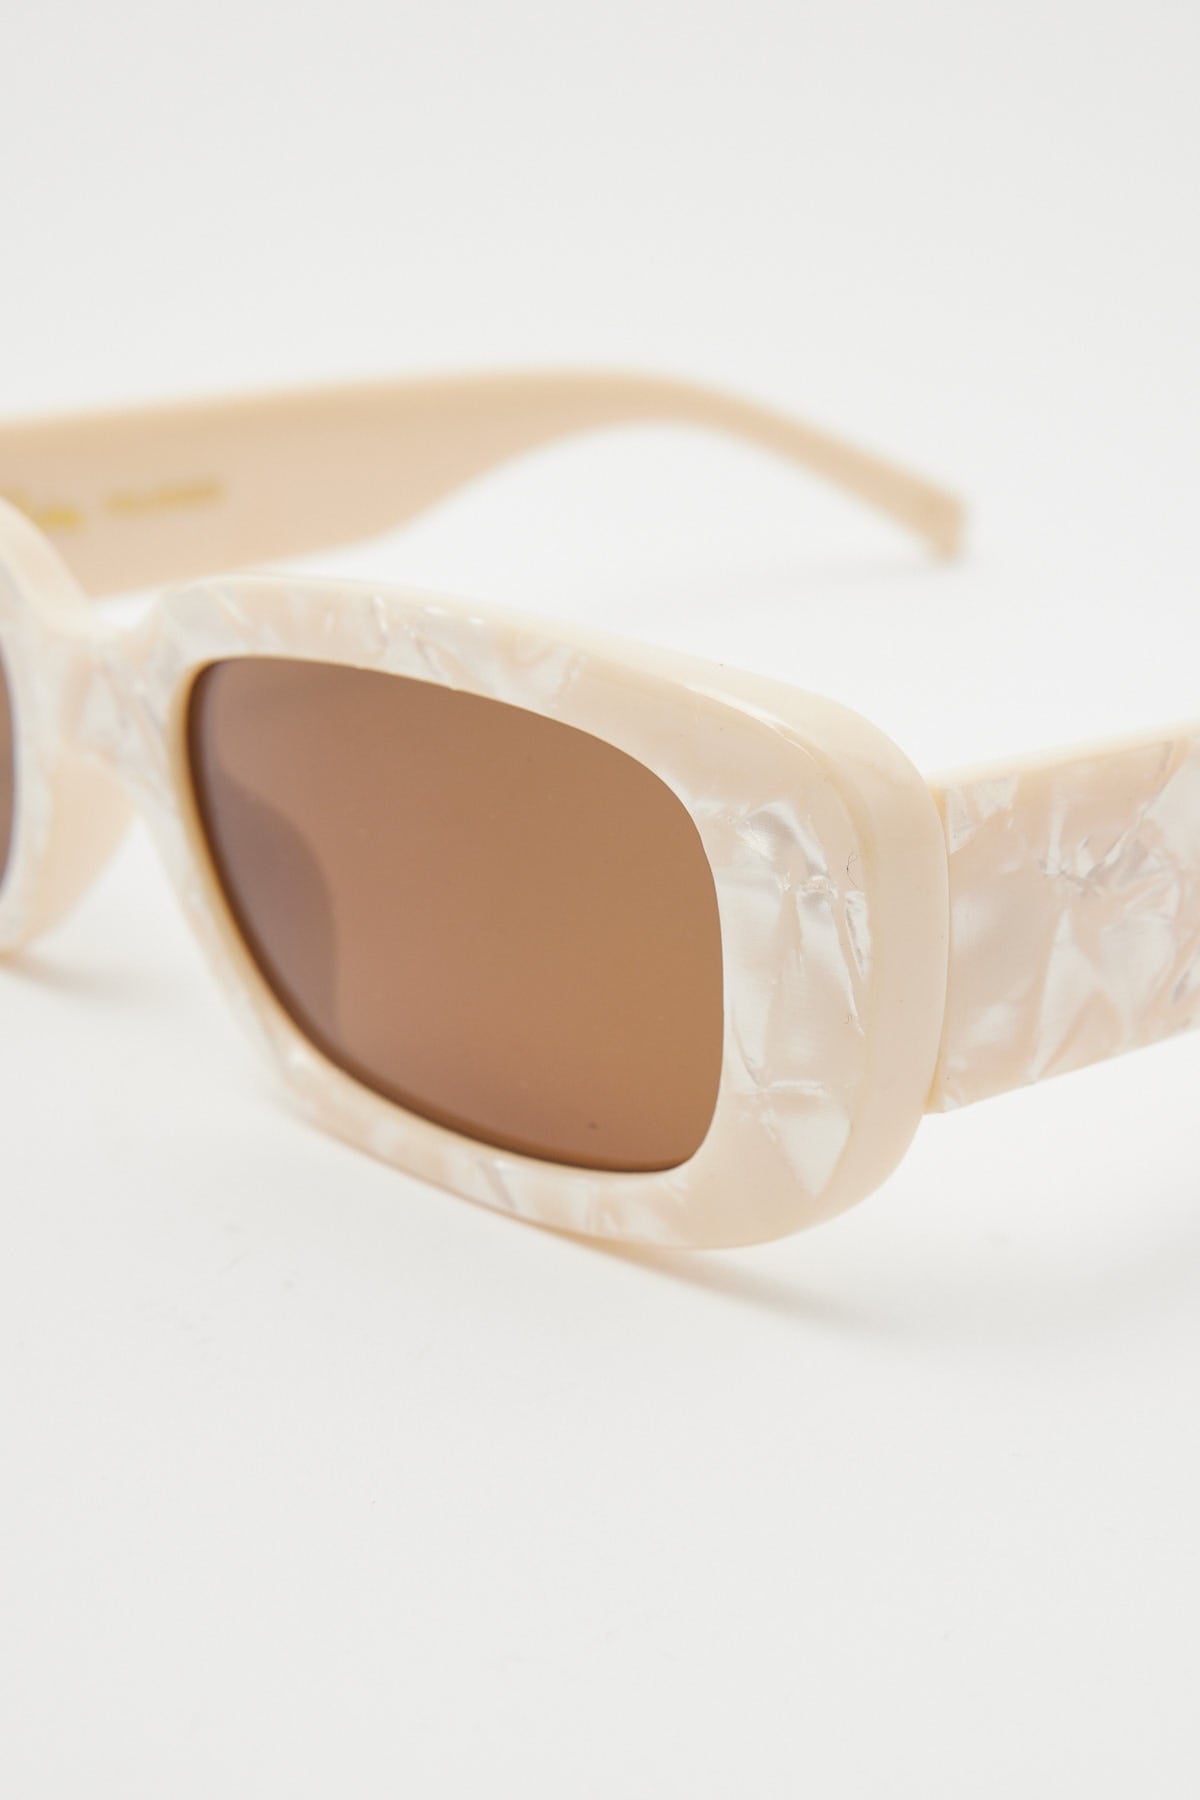 Reality Eyewear Xray Specs Beige Shell